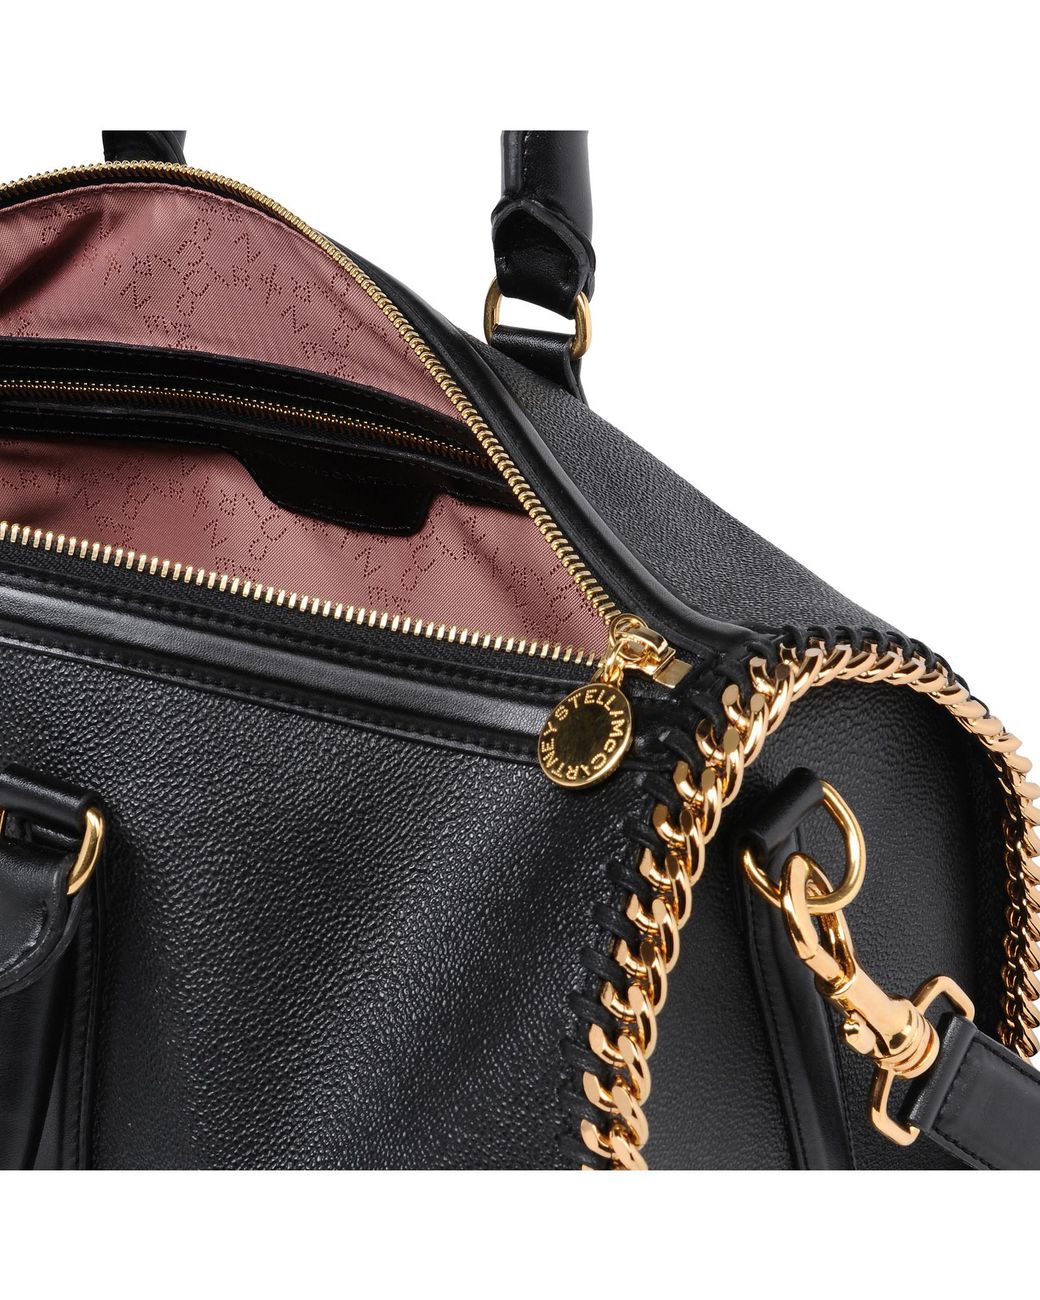 Stella McCartney Leather Falabella Travel Bag in Black | Lyst